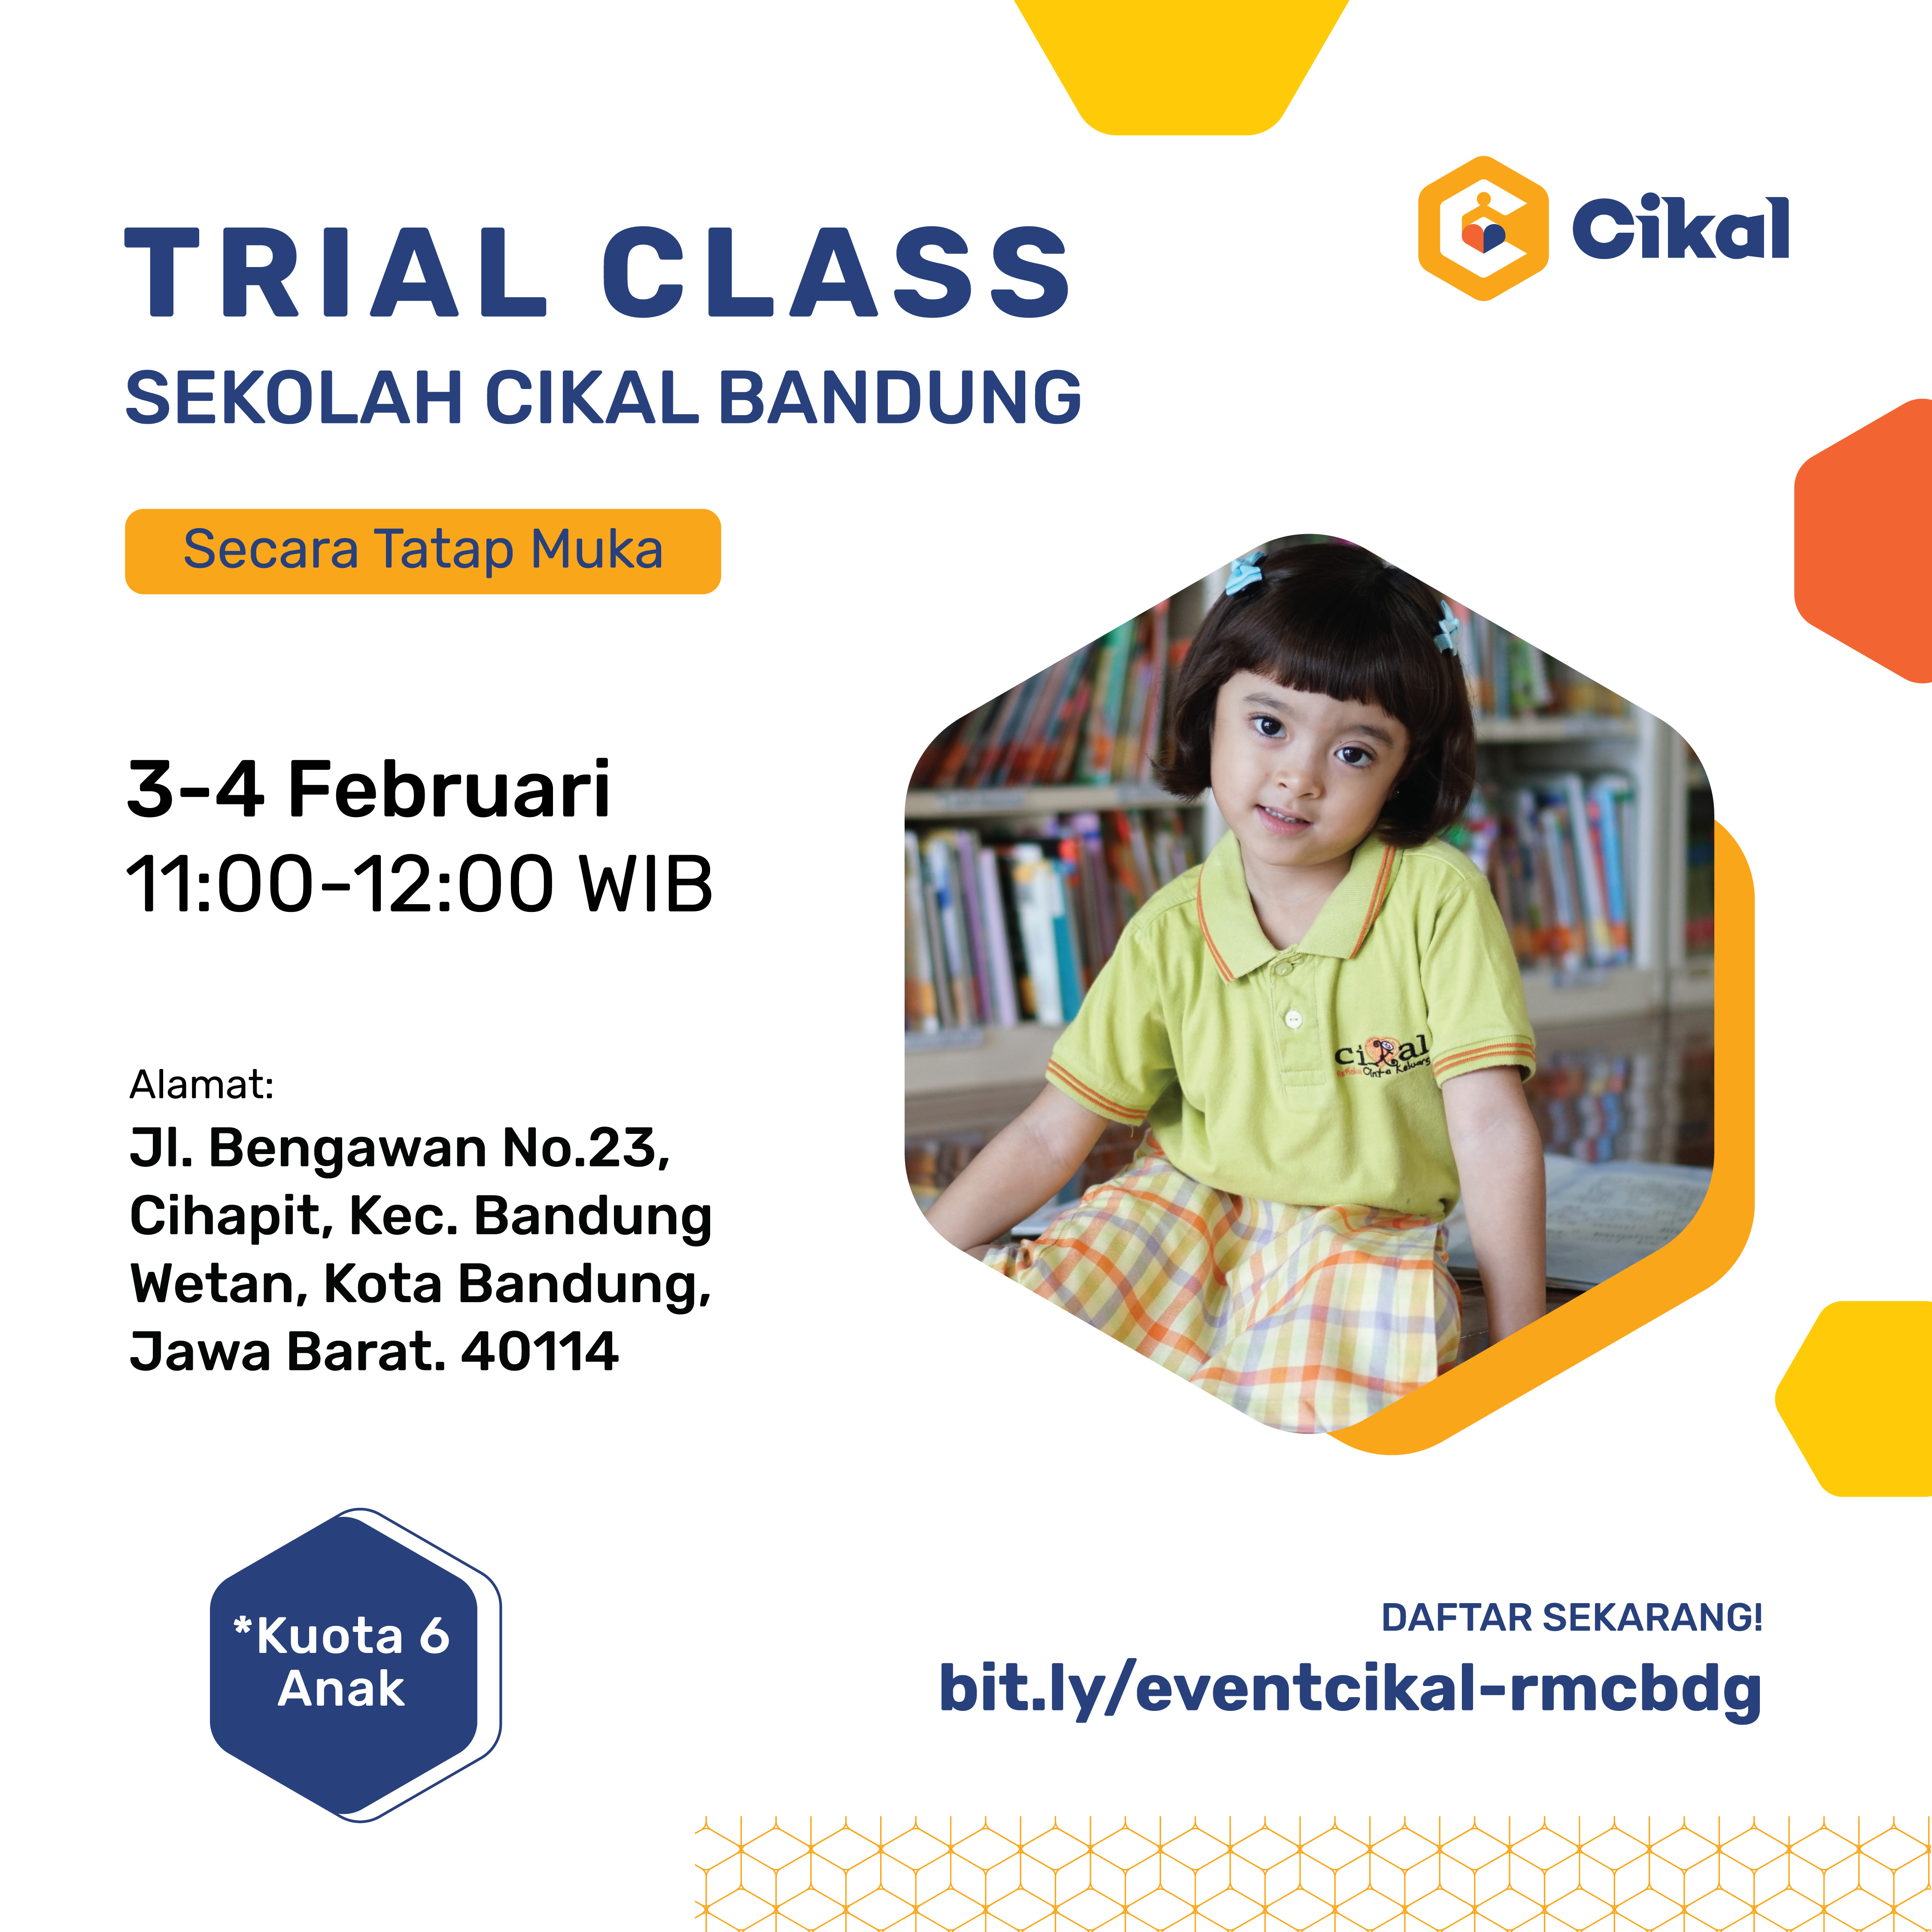 Trial Class Sekolah Cikal Bandung 